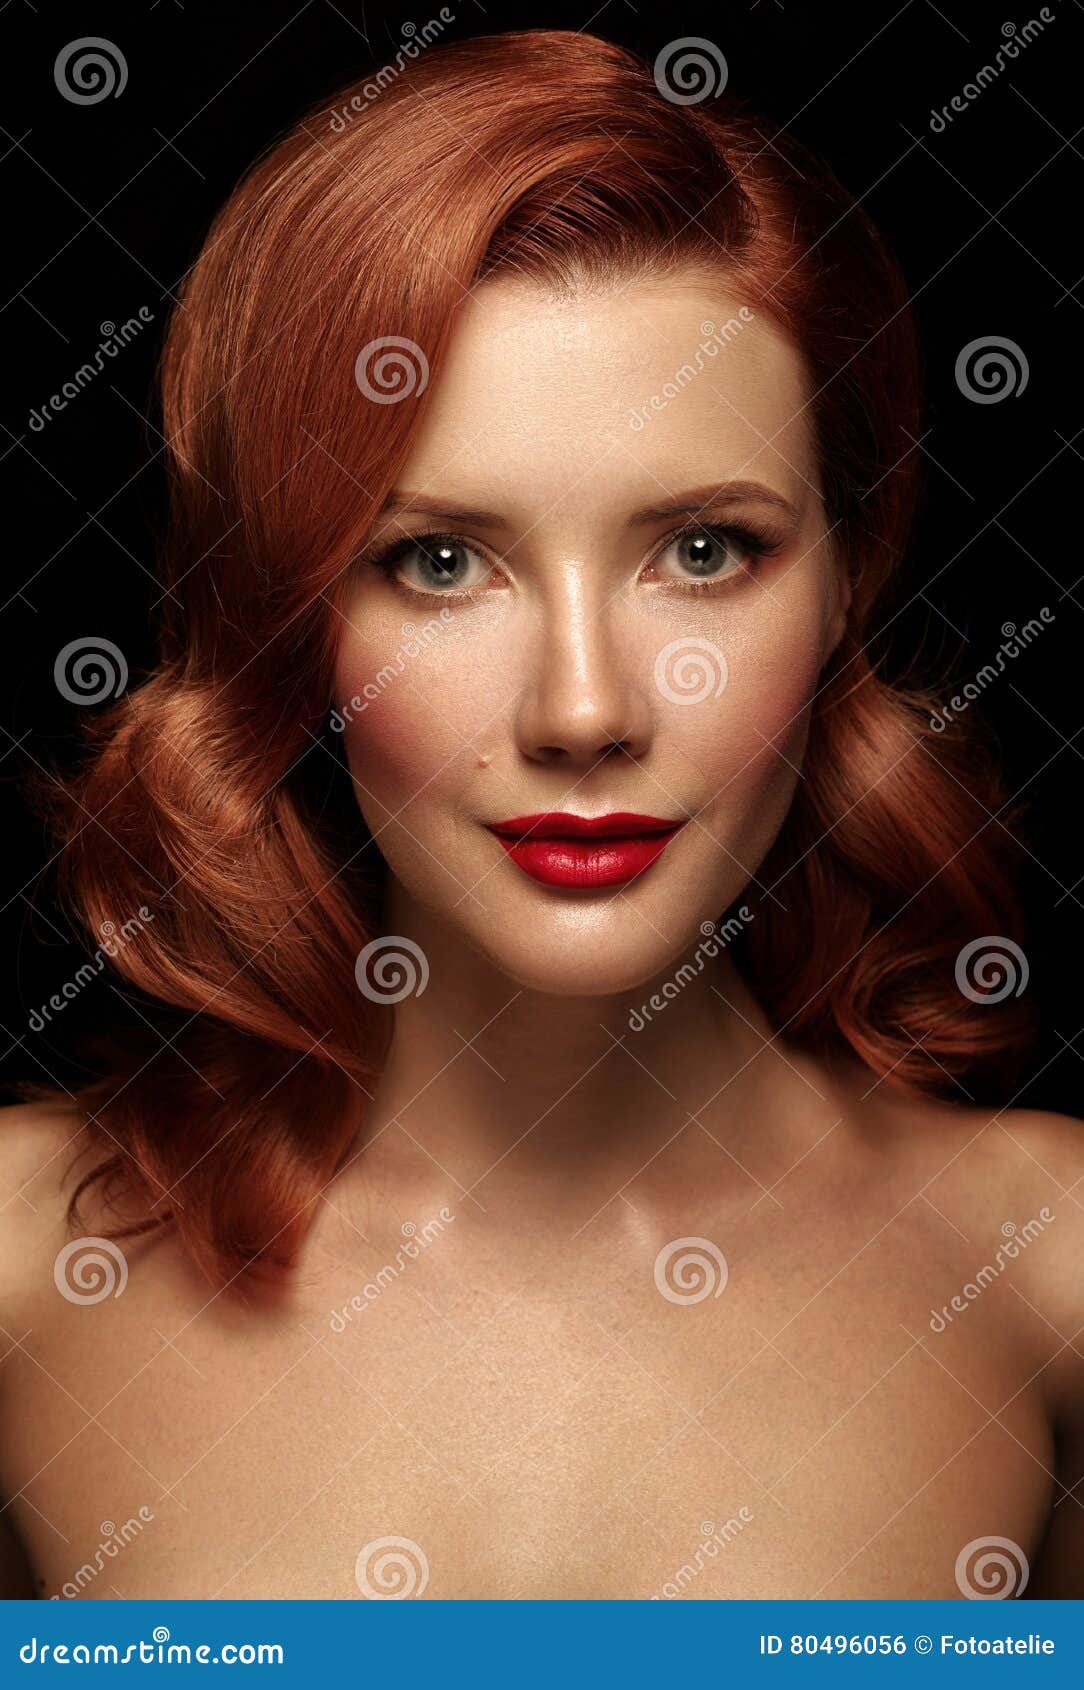 Red Head Girl Nude